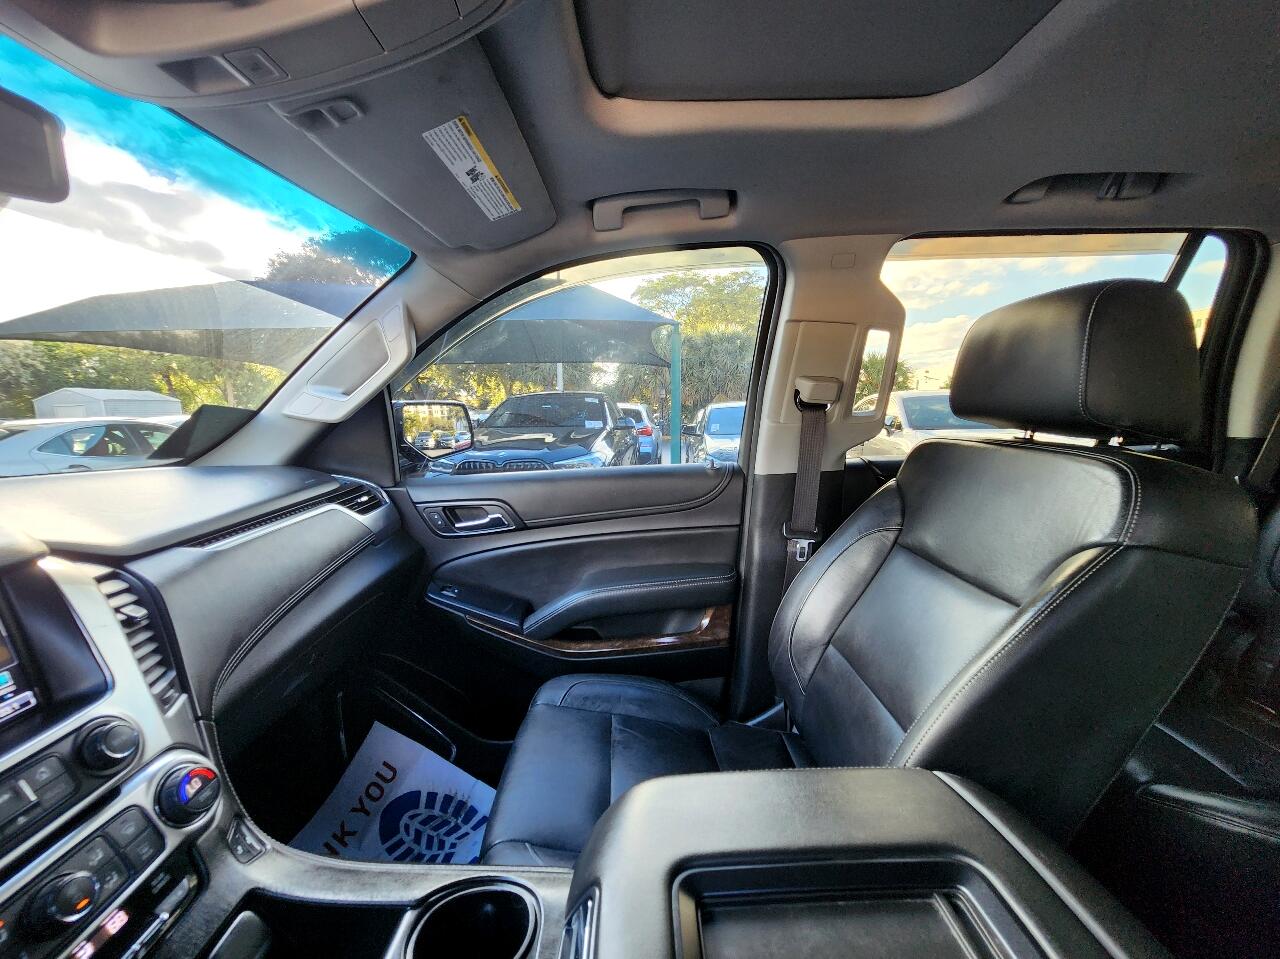 2019 CHEVROLET Tahoe SUV / Crossover - $29,999